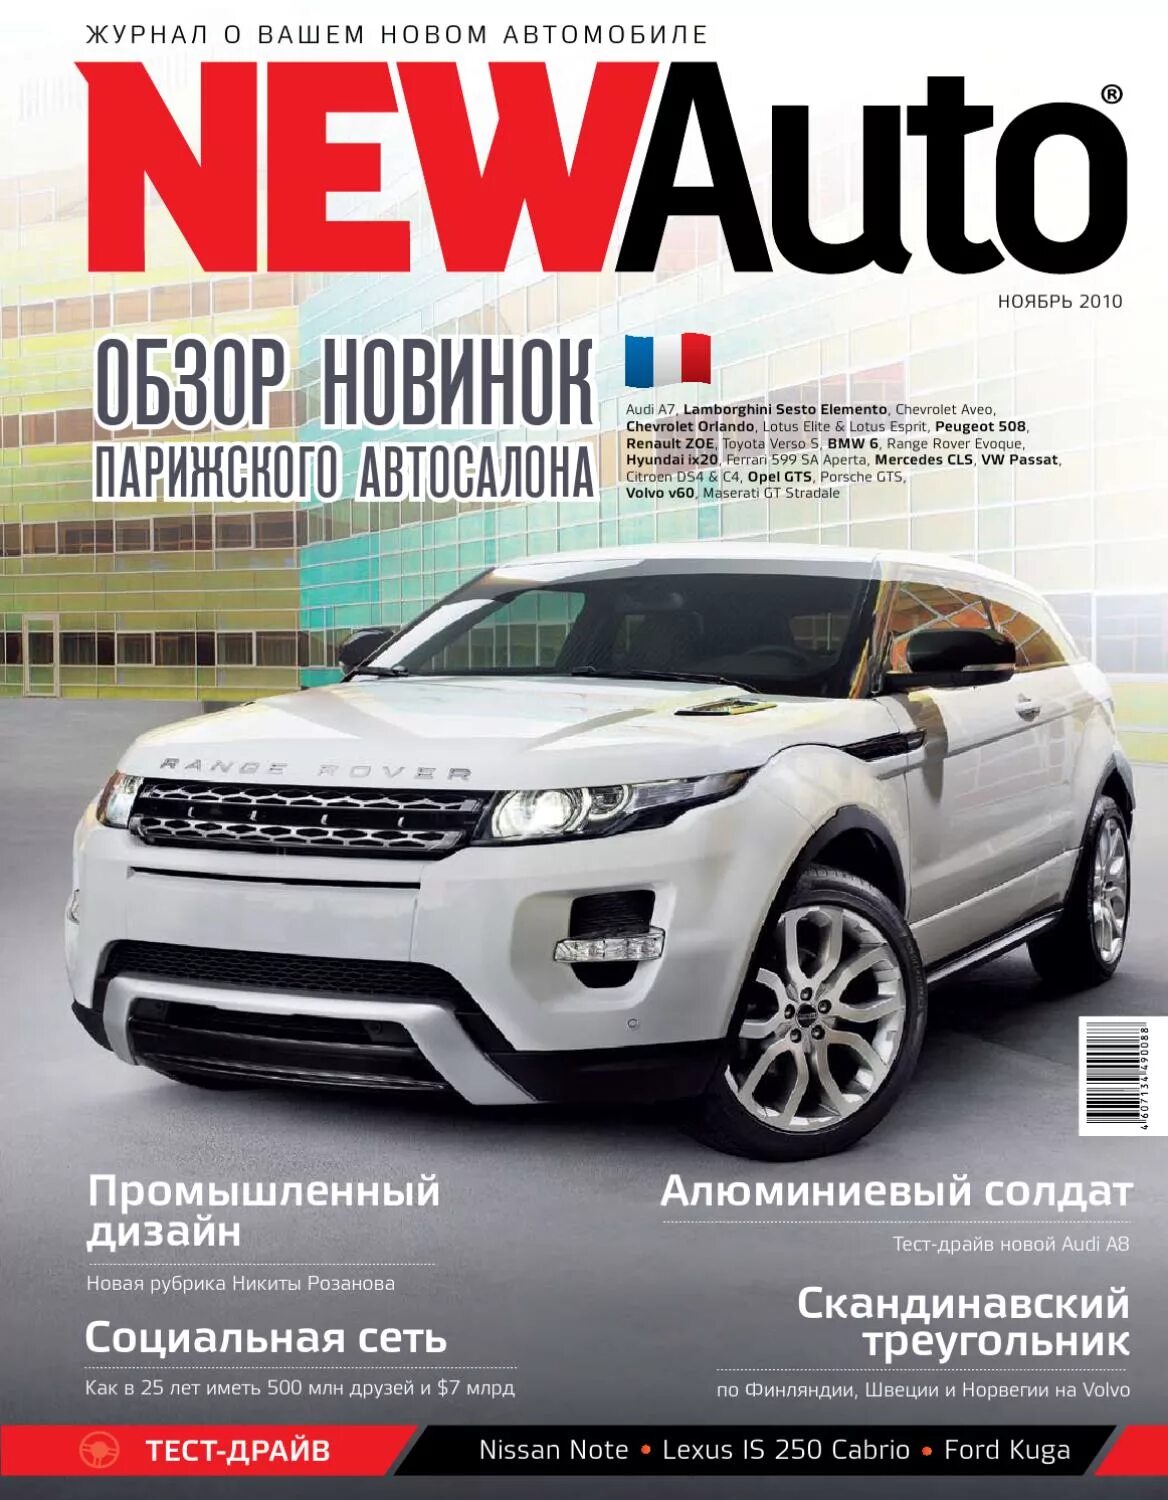 Newauto. Журнал автомобили. Рекламные журналы авто. Обложка автомобильного журнала. New auto журнал.